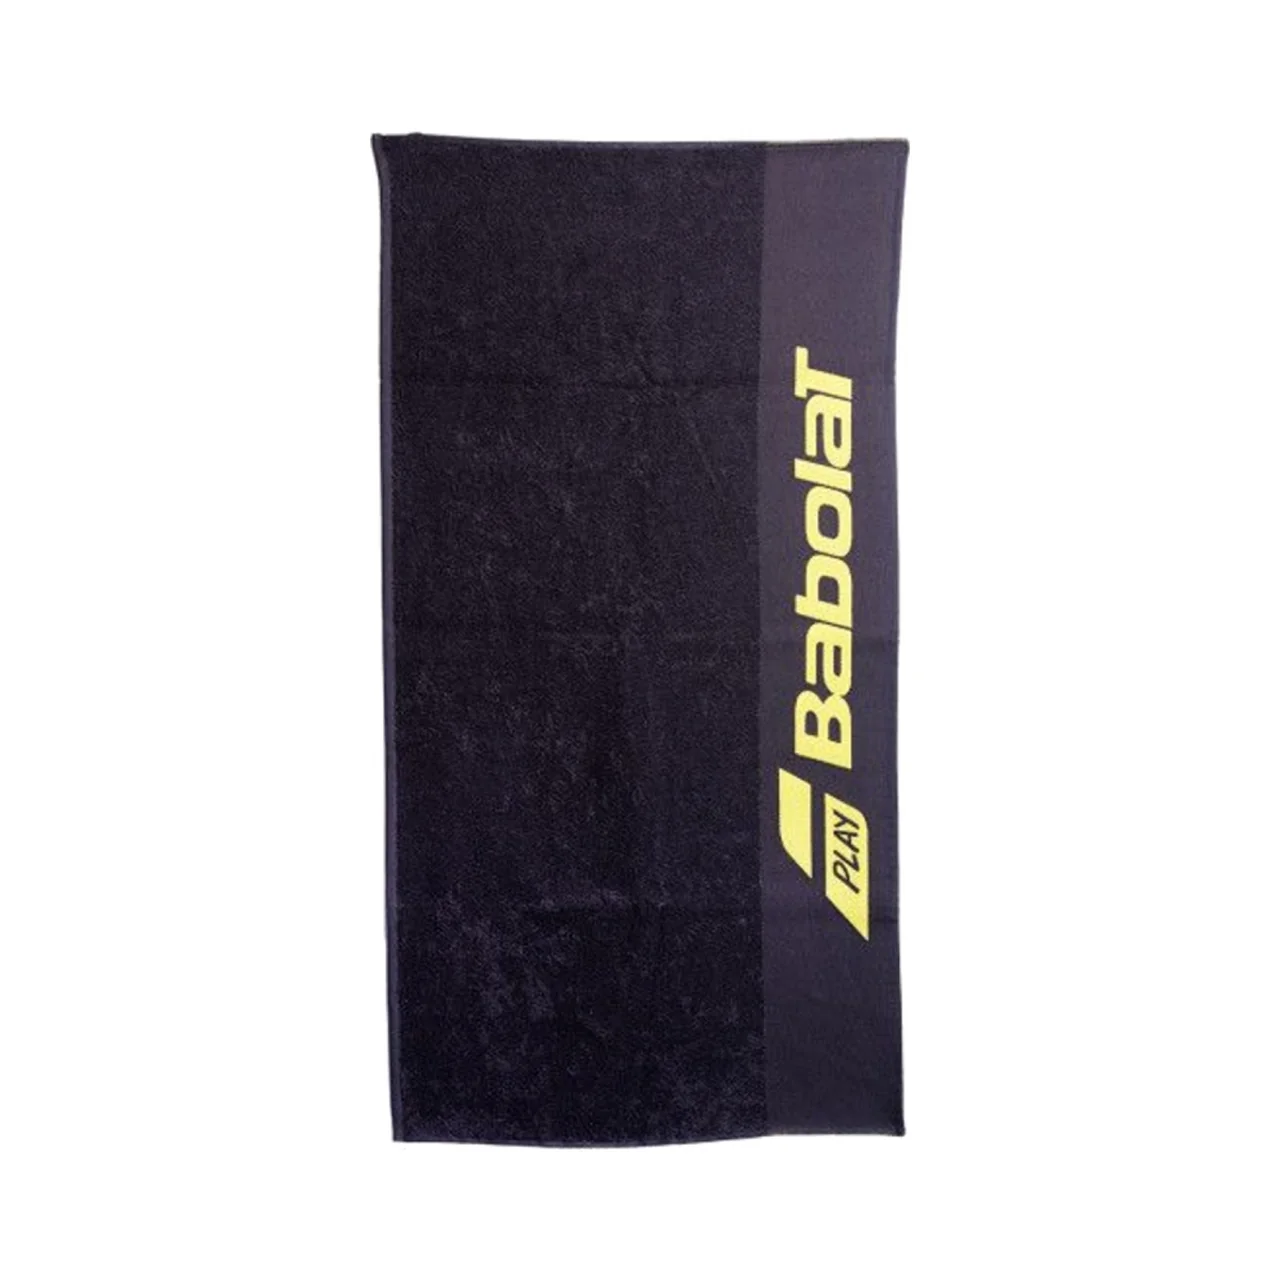 Babolat Towel Black/Aero Yellow